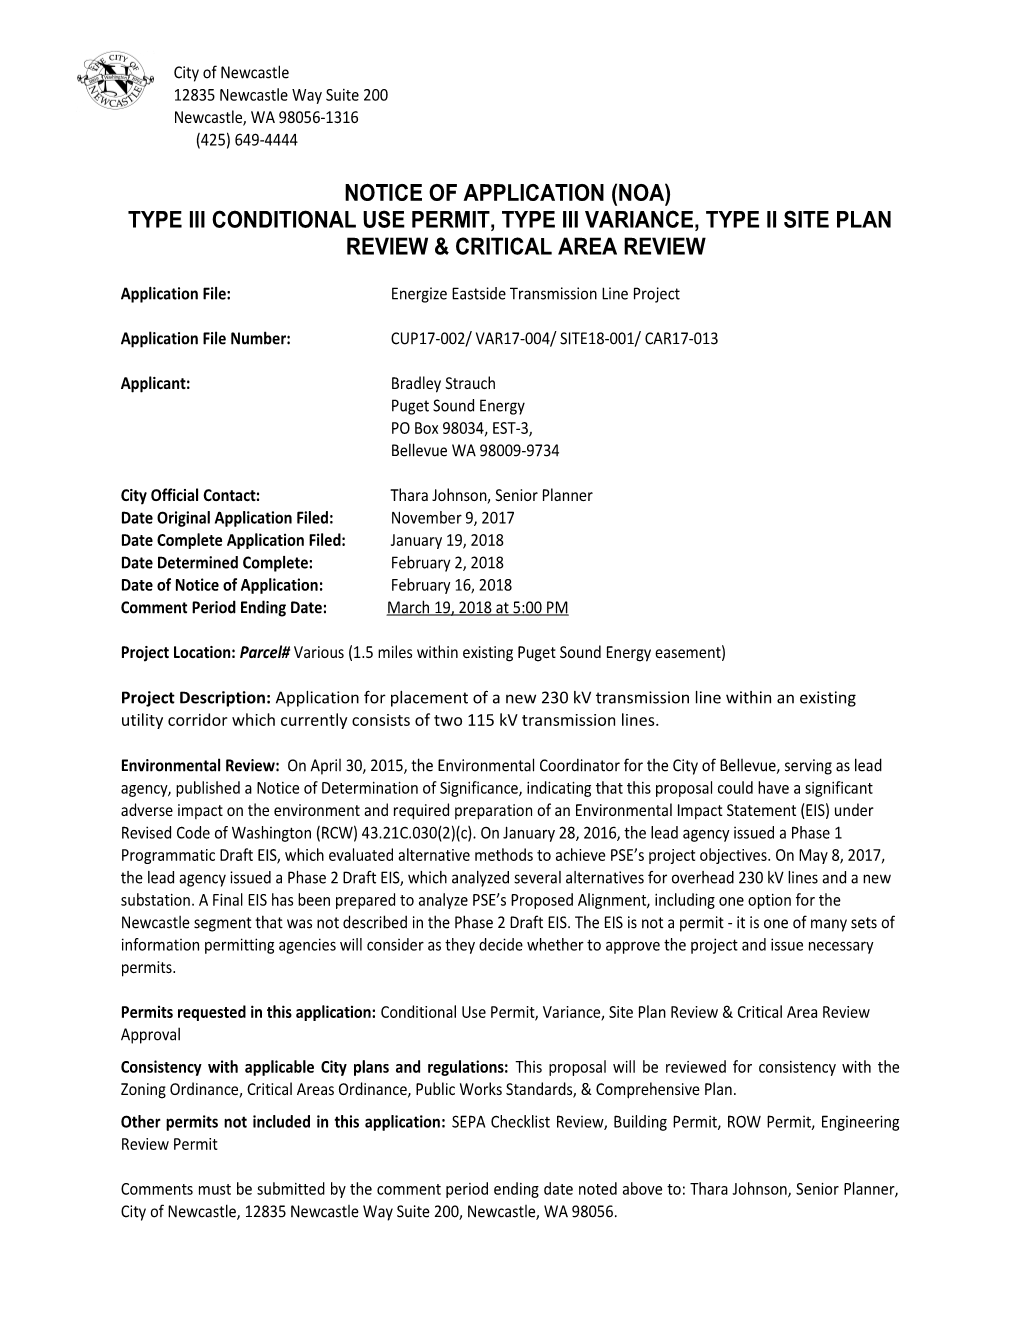 Notice of Application (Noa)